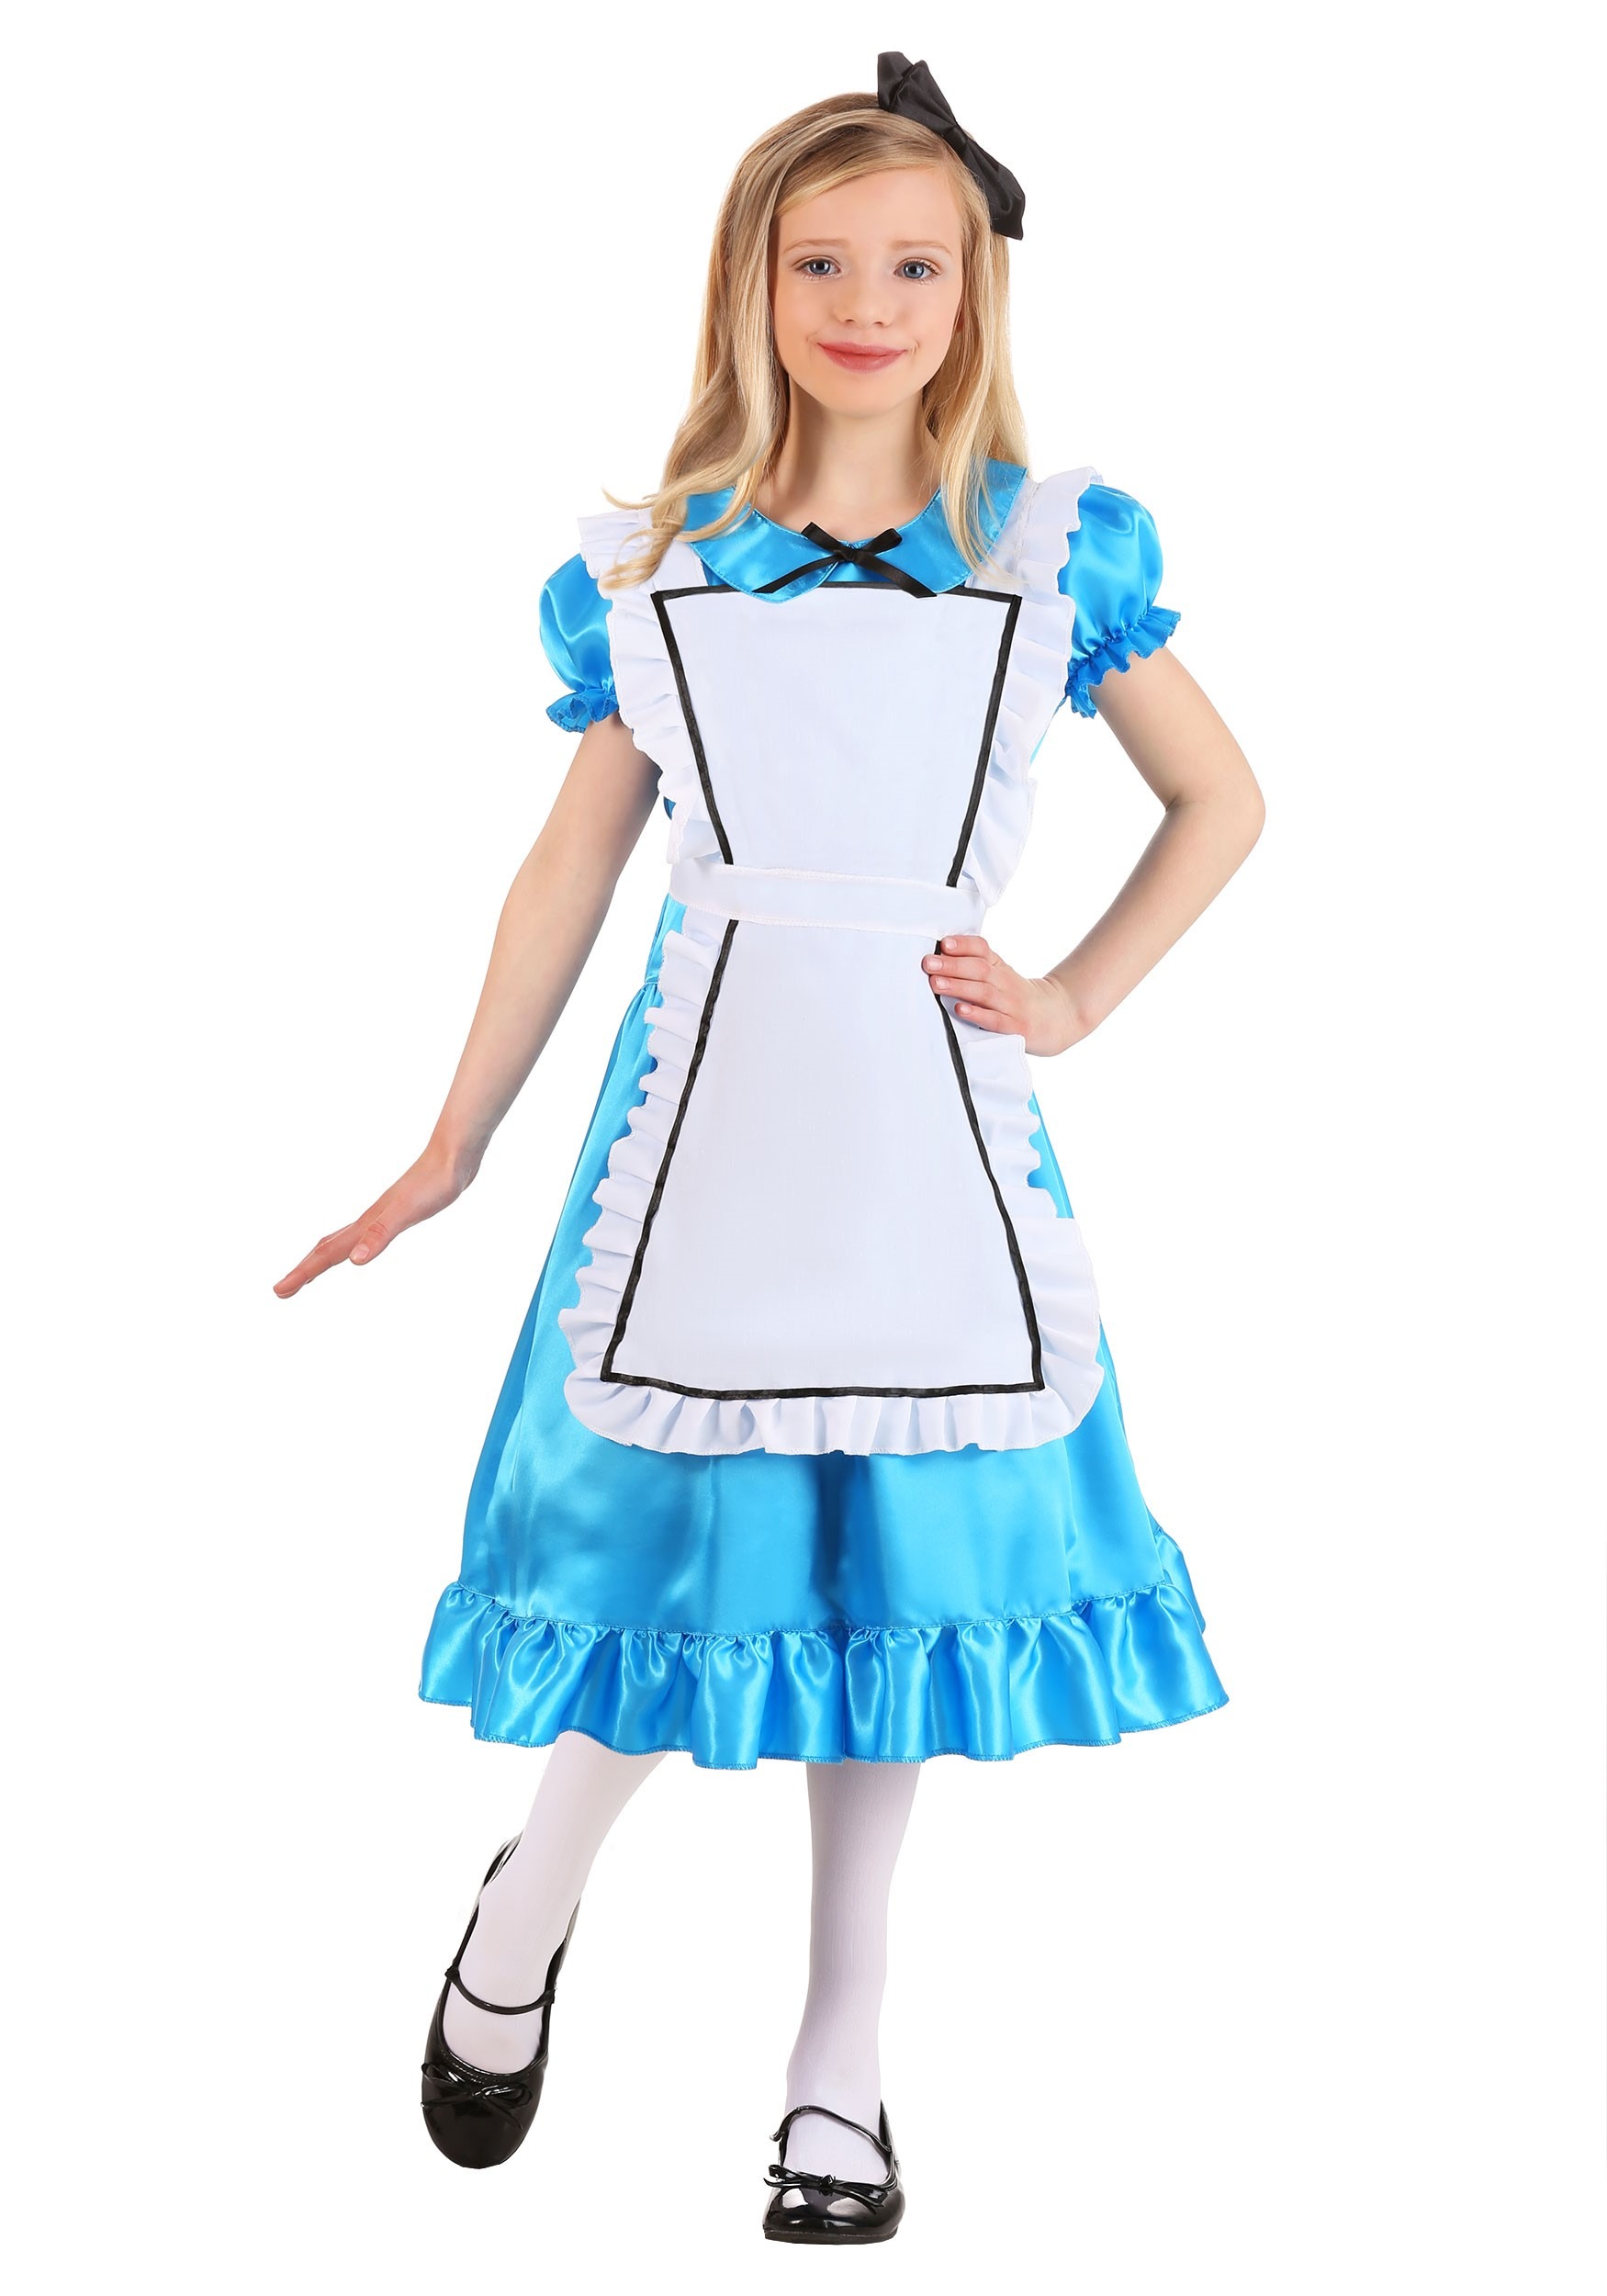 Photos - Fancy Dress Wonderful FUN Costumes  Alice Girl's Costume Black/Blue/White FUN65 